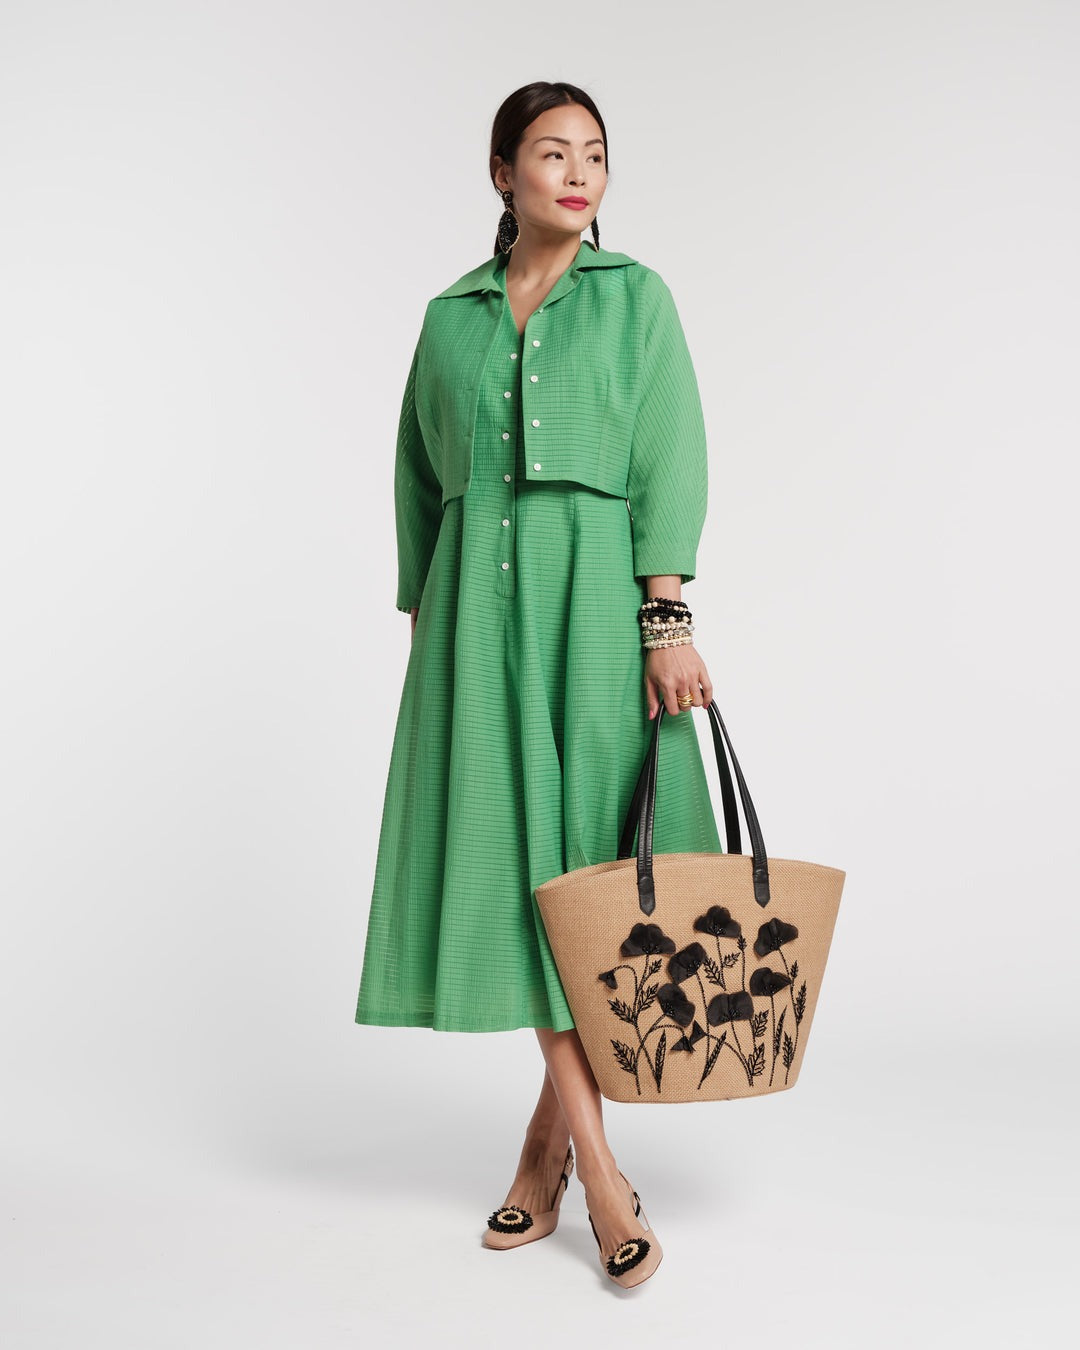 Frances Valentine Peggy Dress Set Cotton Green